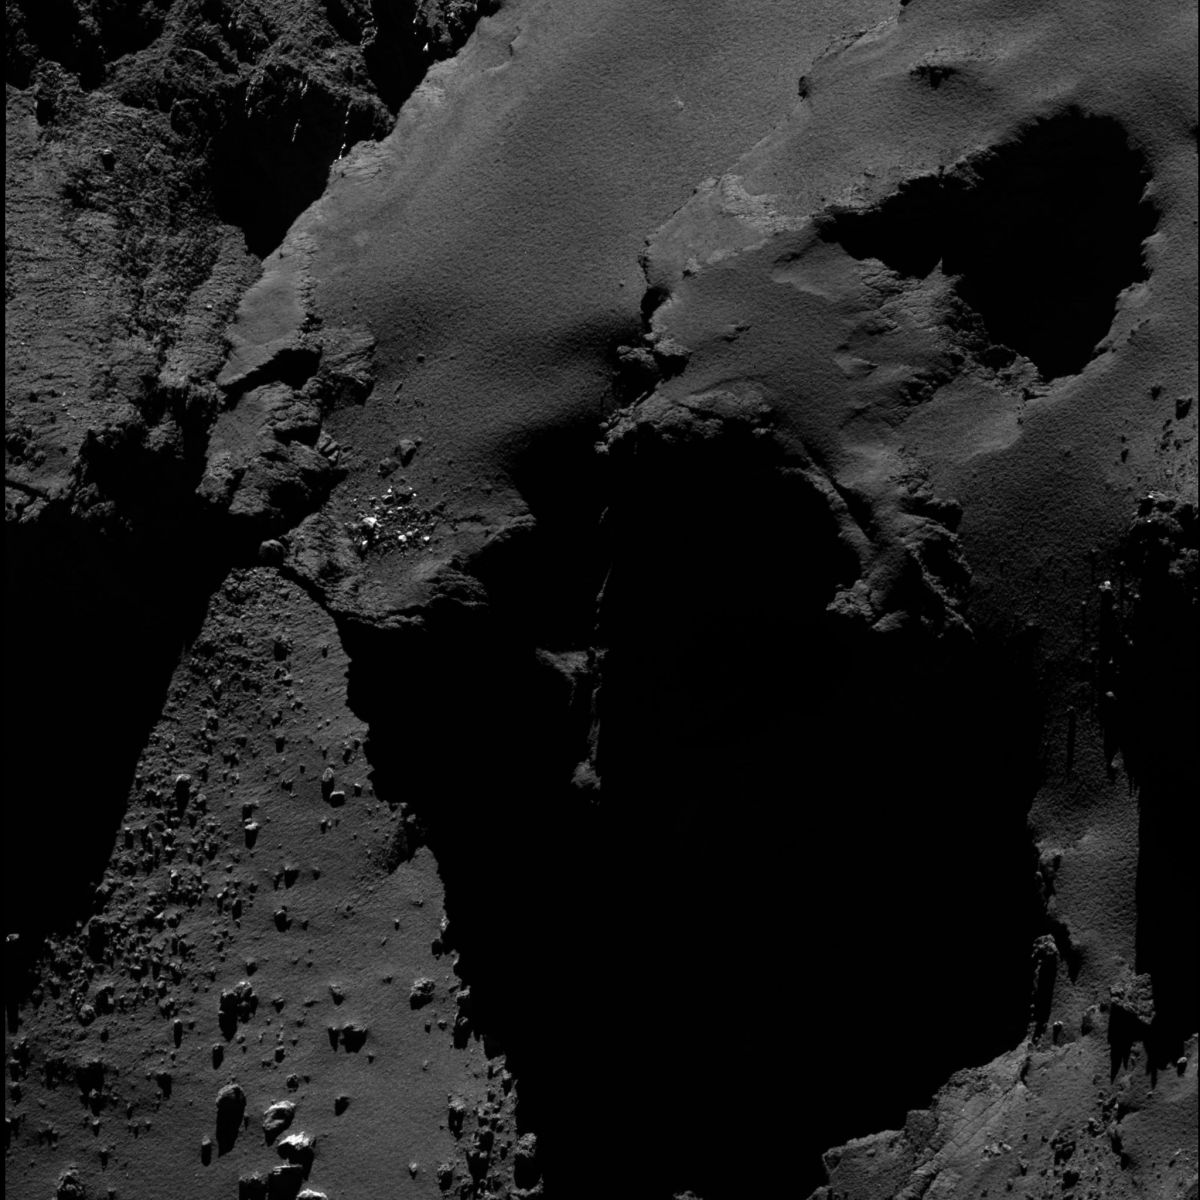 Comet on 12 March 2016 OSIRIS narrow angle camera